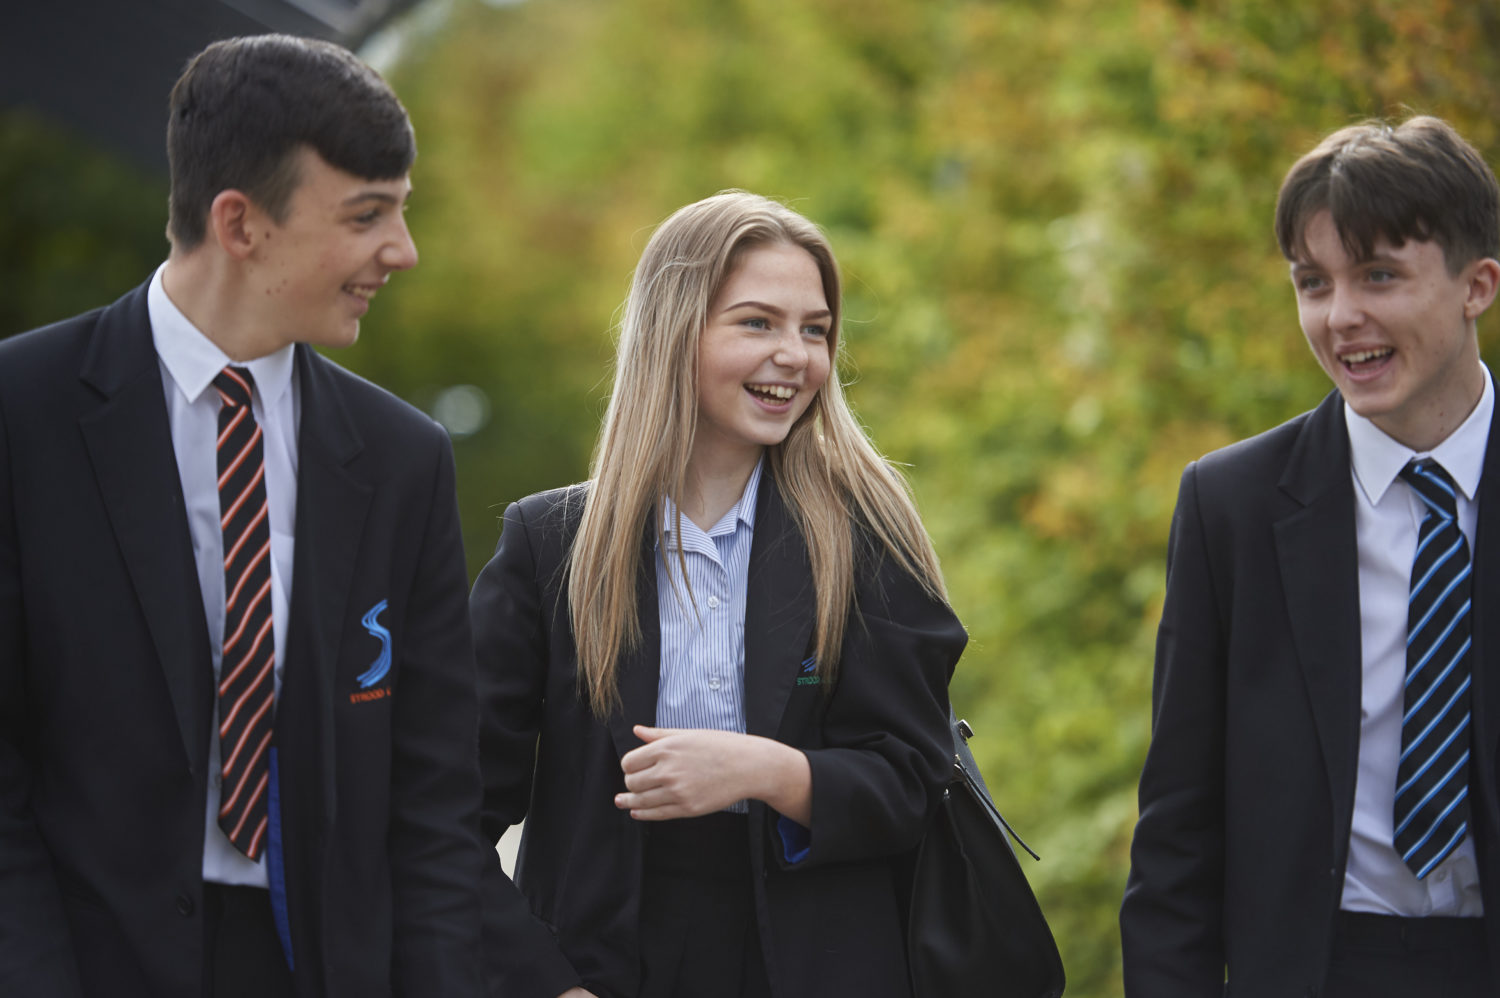 Three students talking and smiling while walking towards the camera.